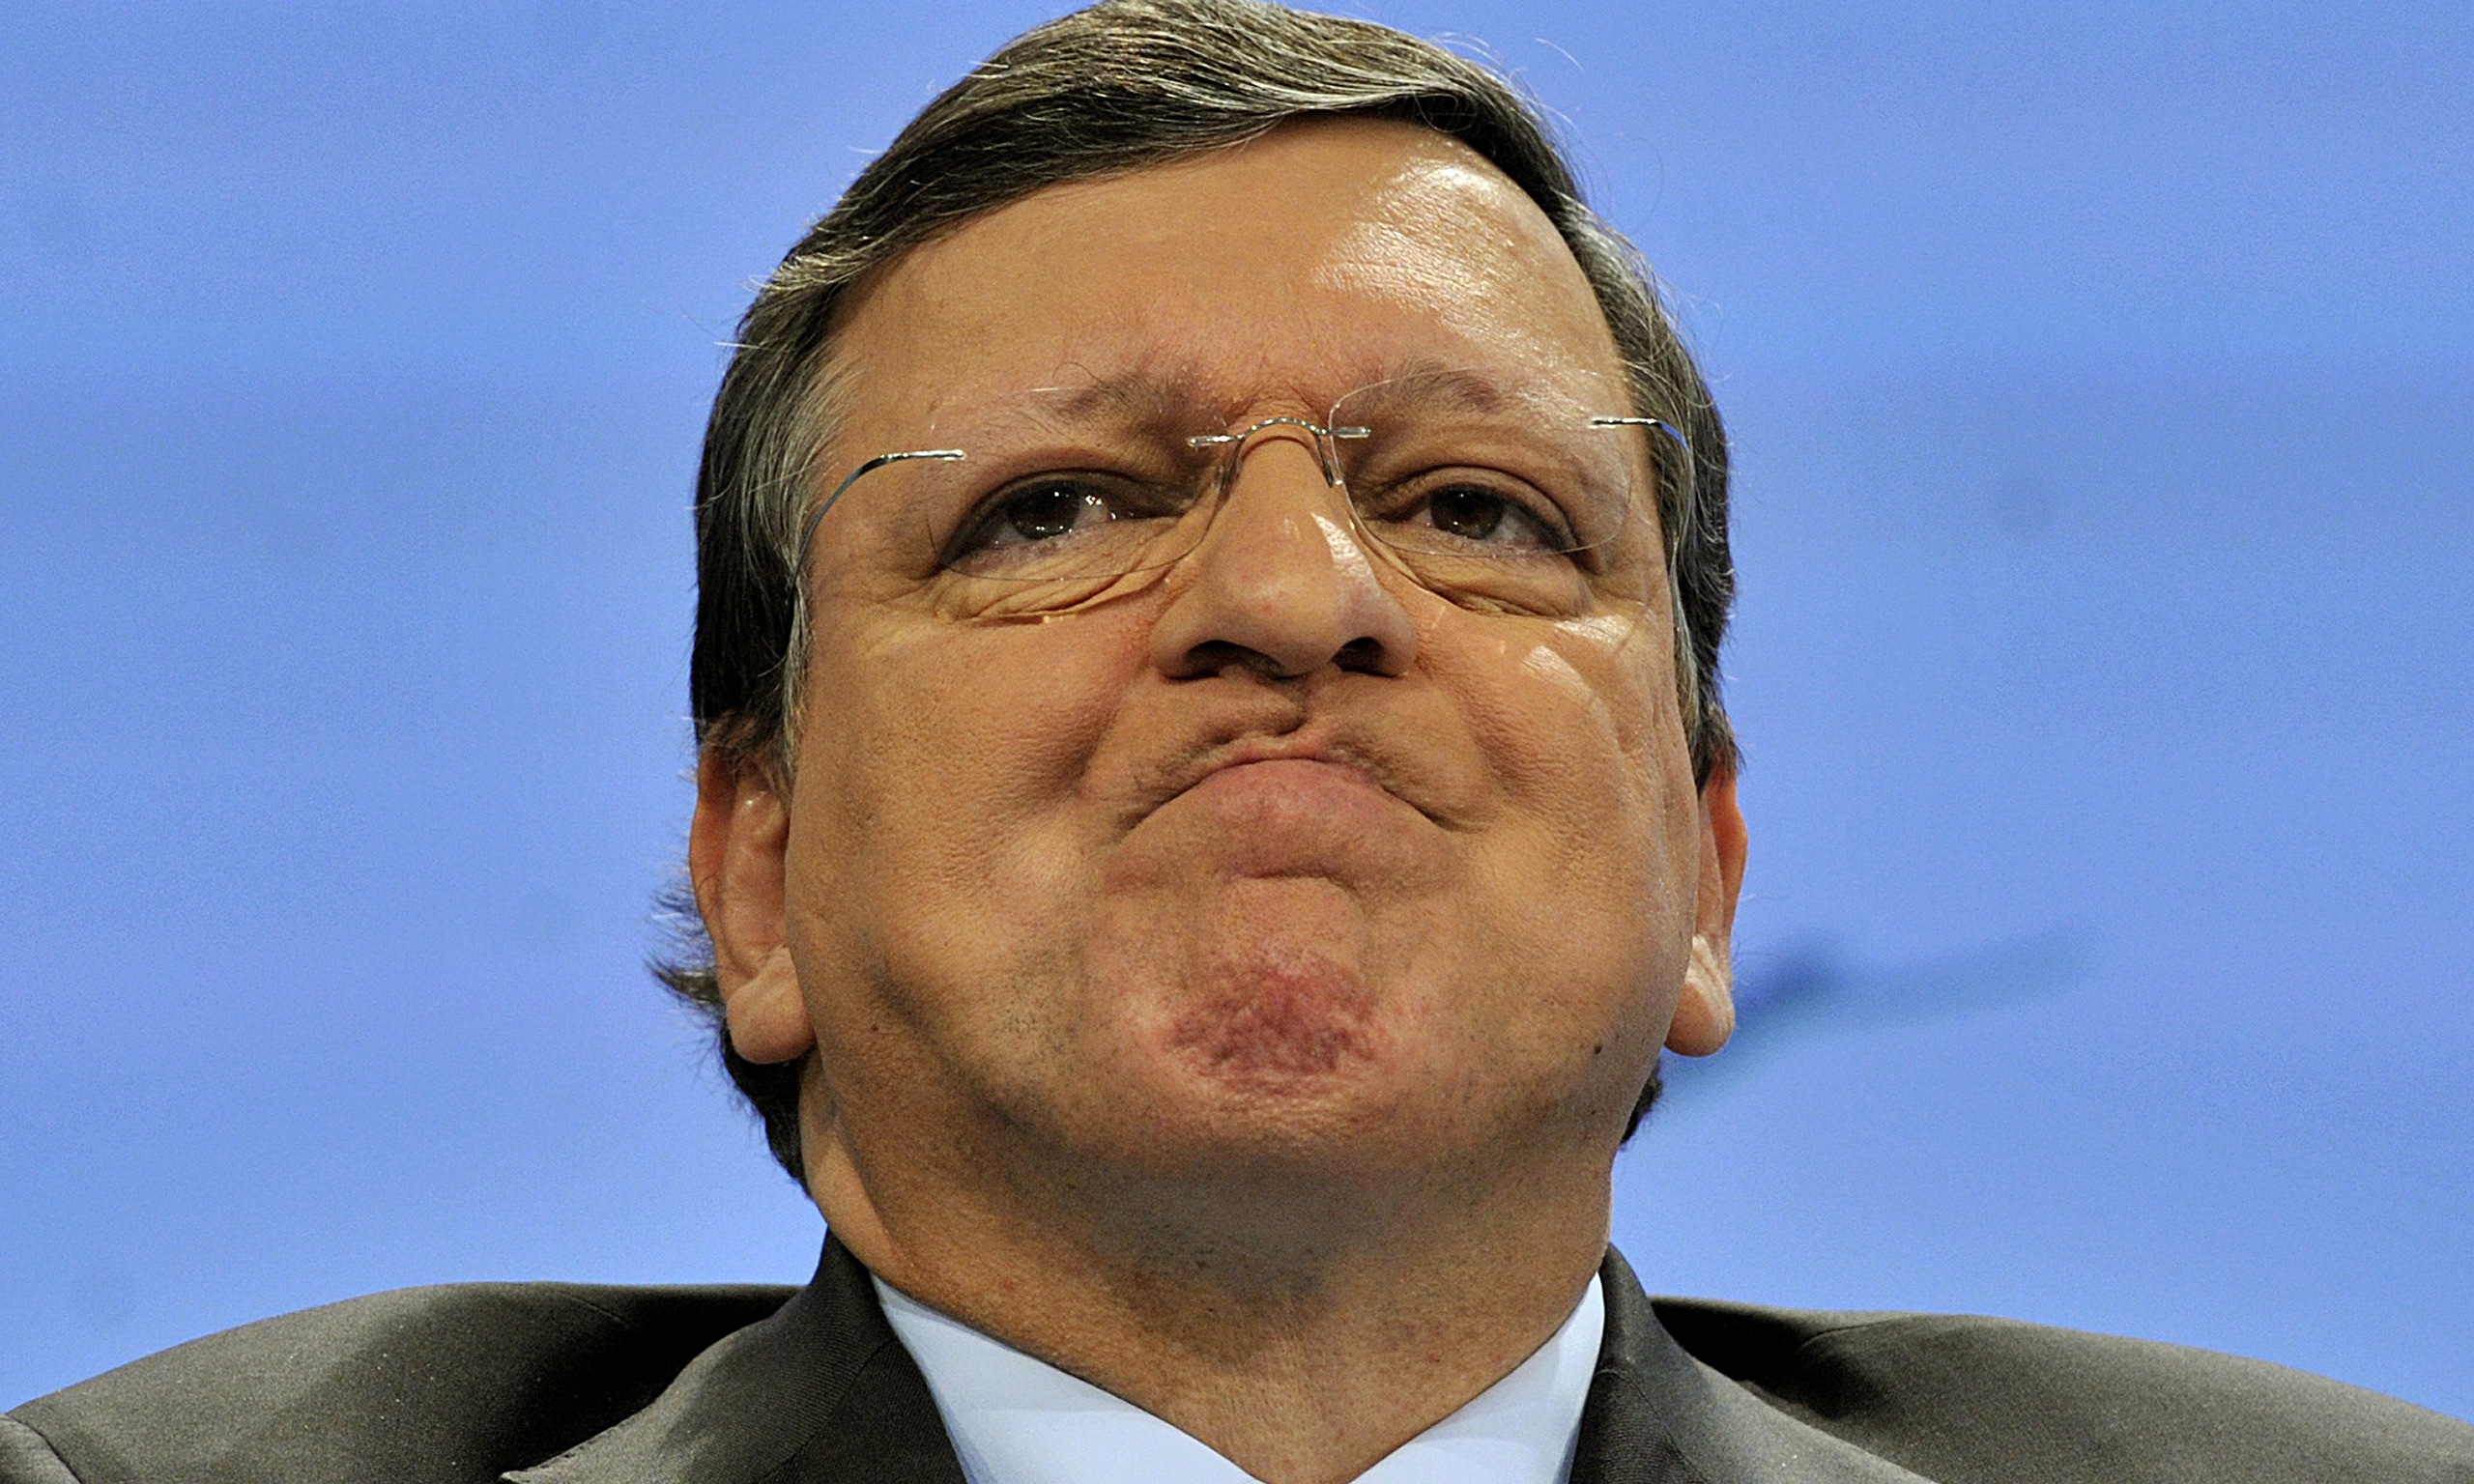 José Manuel Barroso, EC president